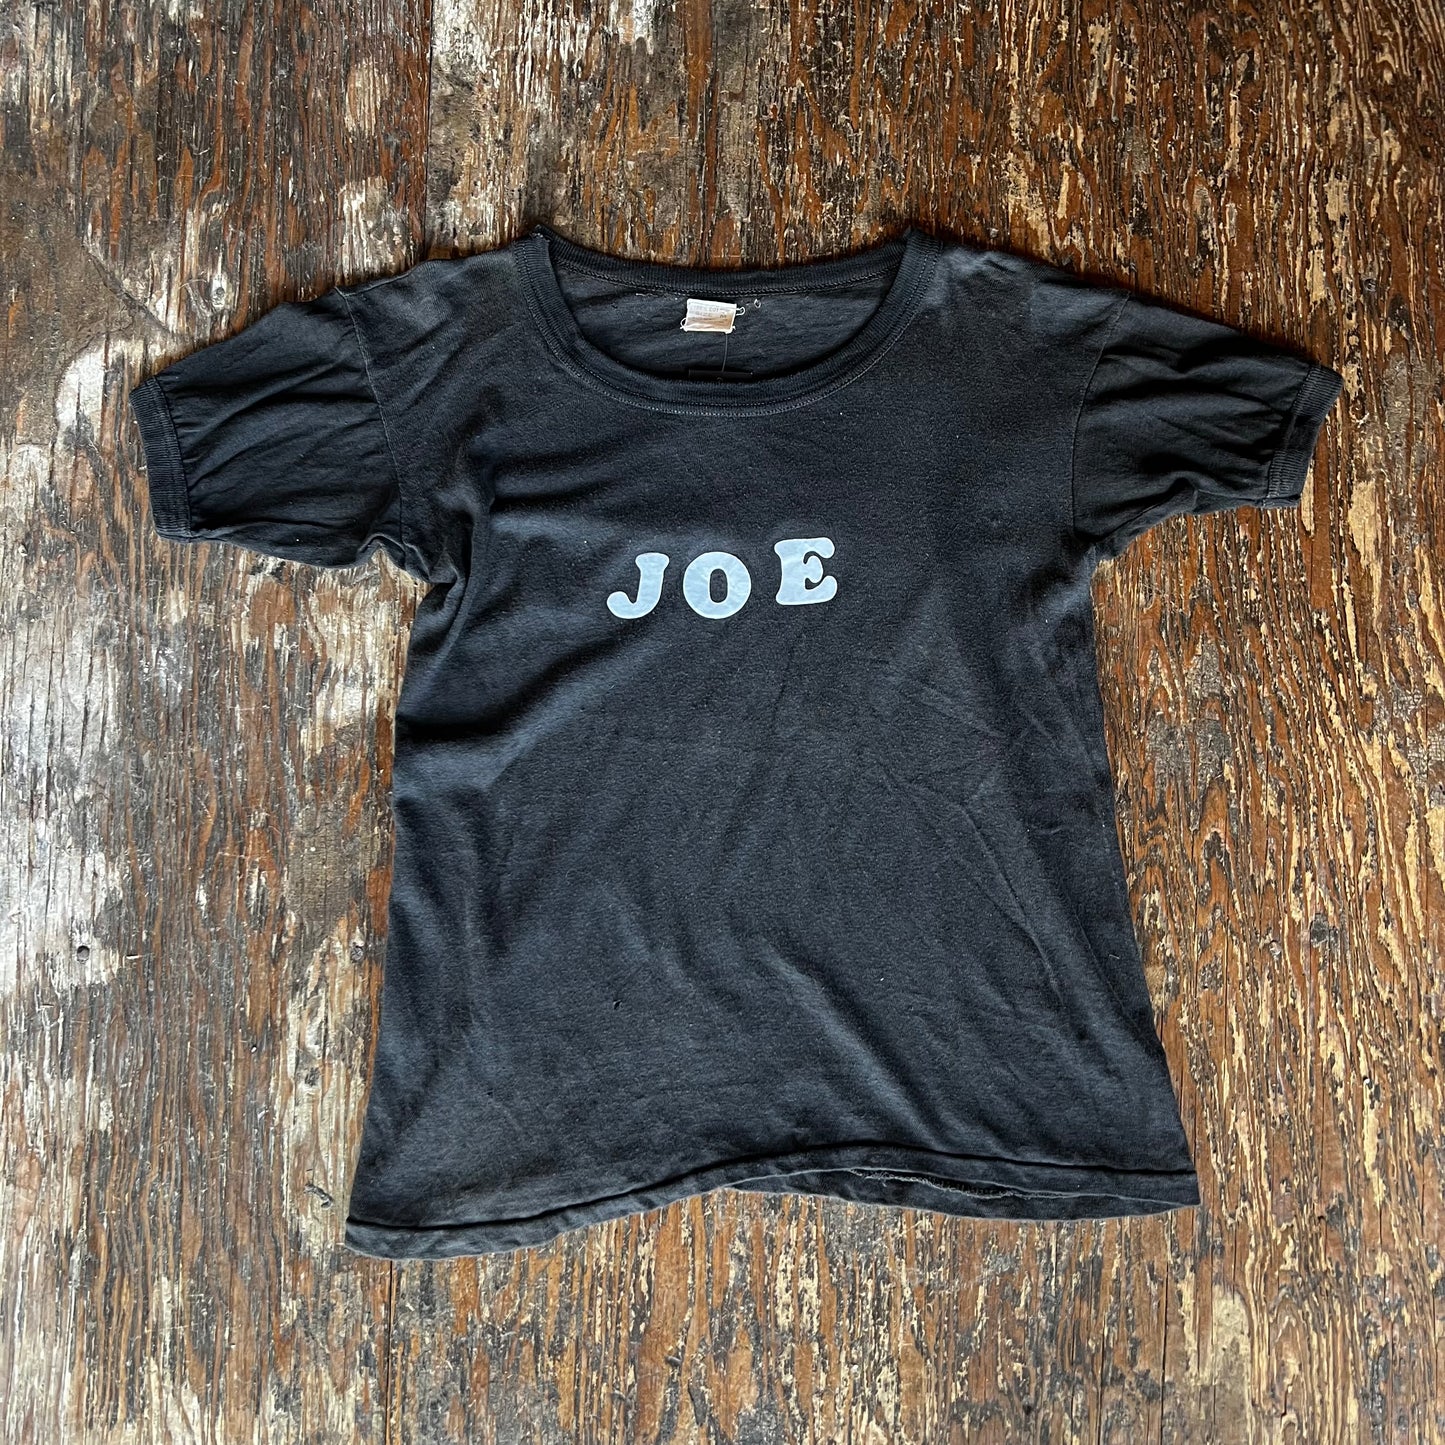 Vintage Awesome Joe Black T-Shirt